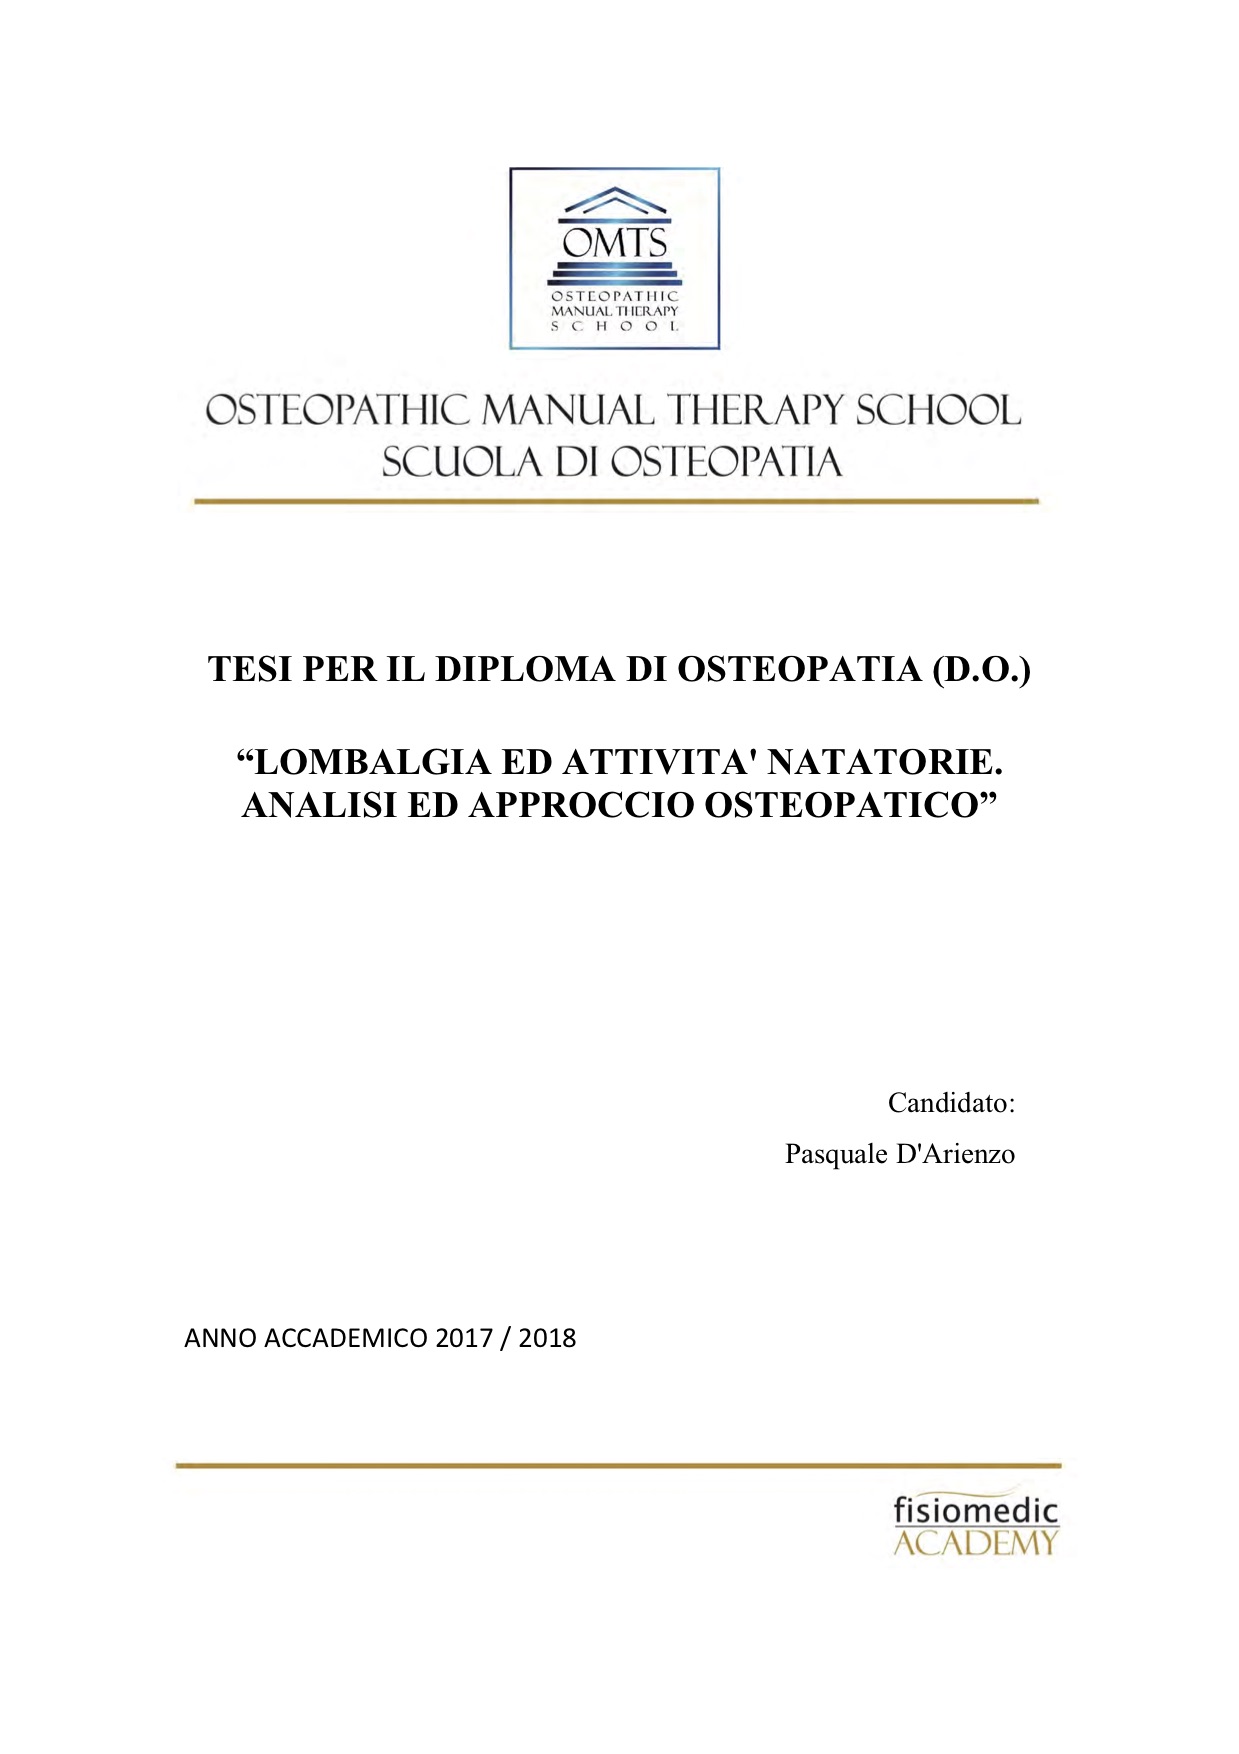 Pasquale Darienzo Tesi Diploma Osteopatia 2018